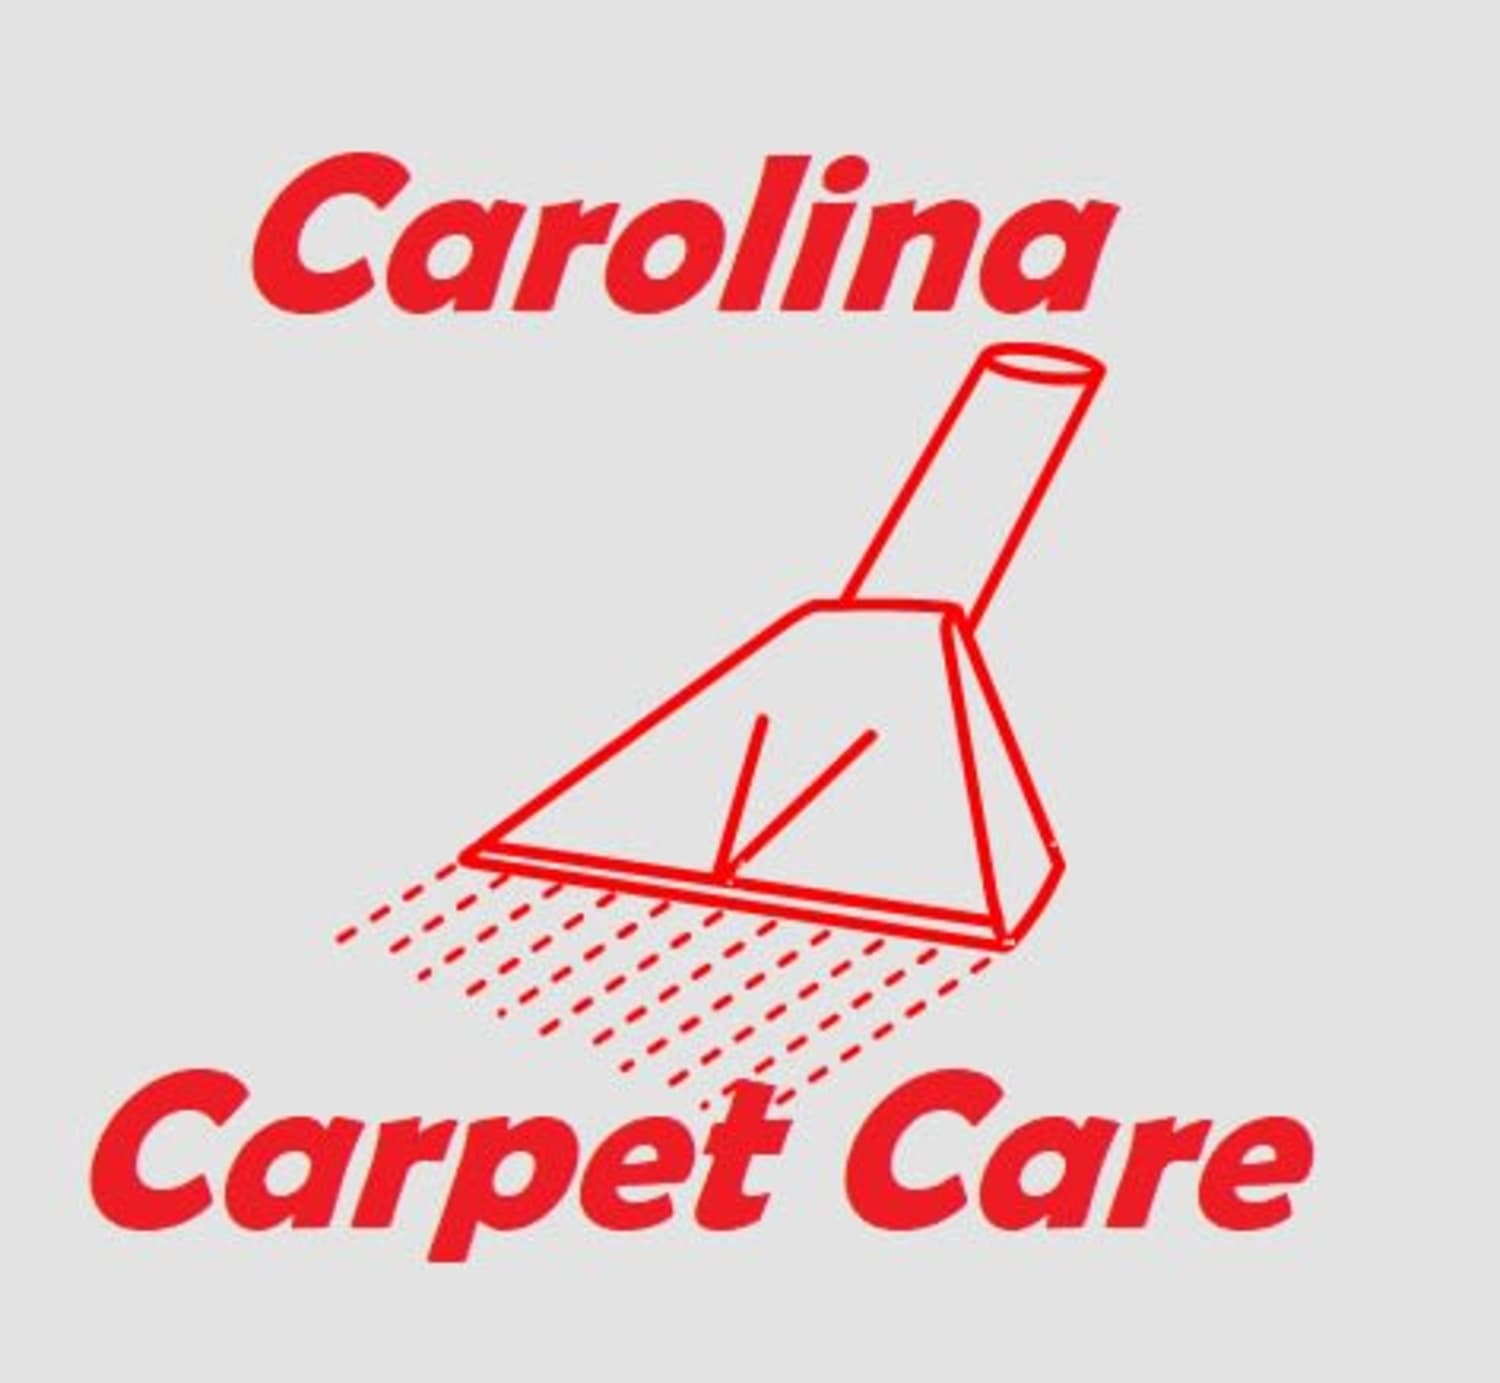 Carolina Carpet Care